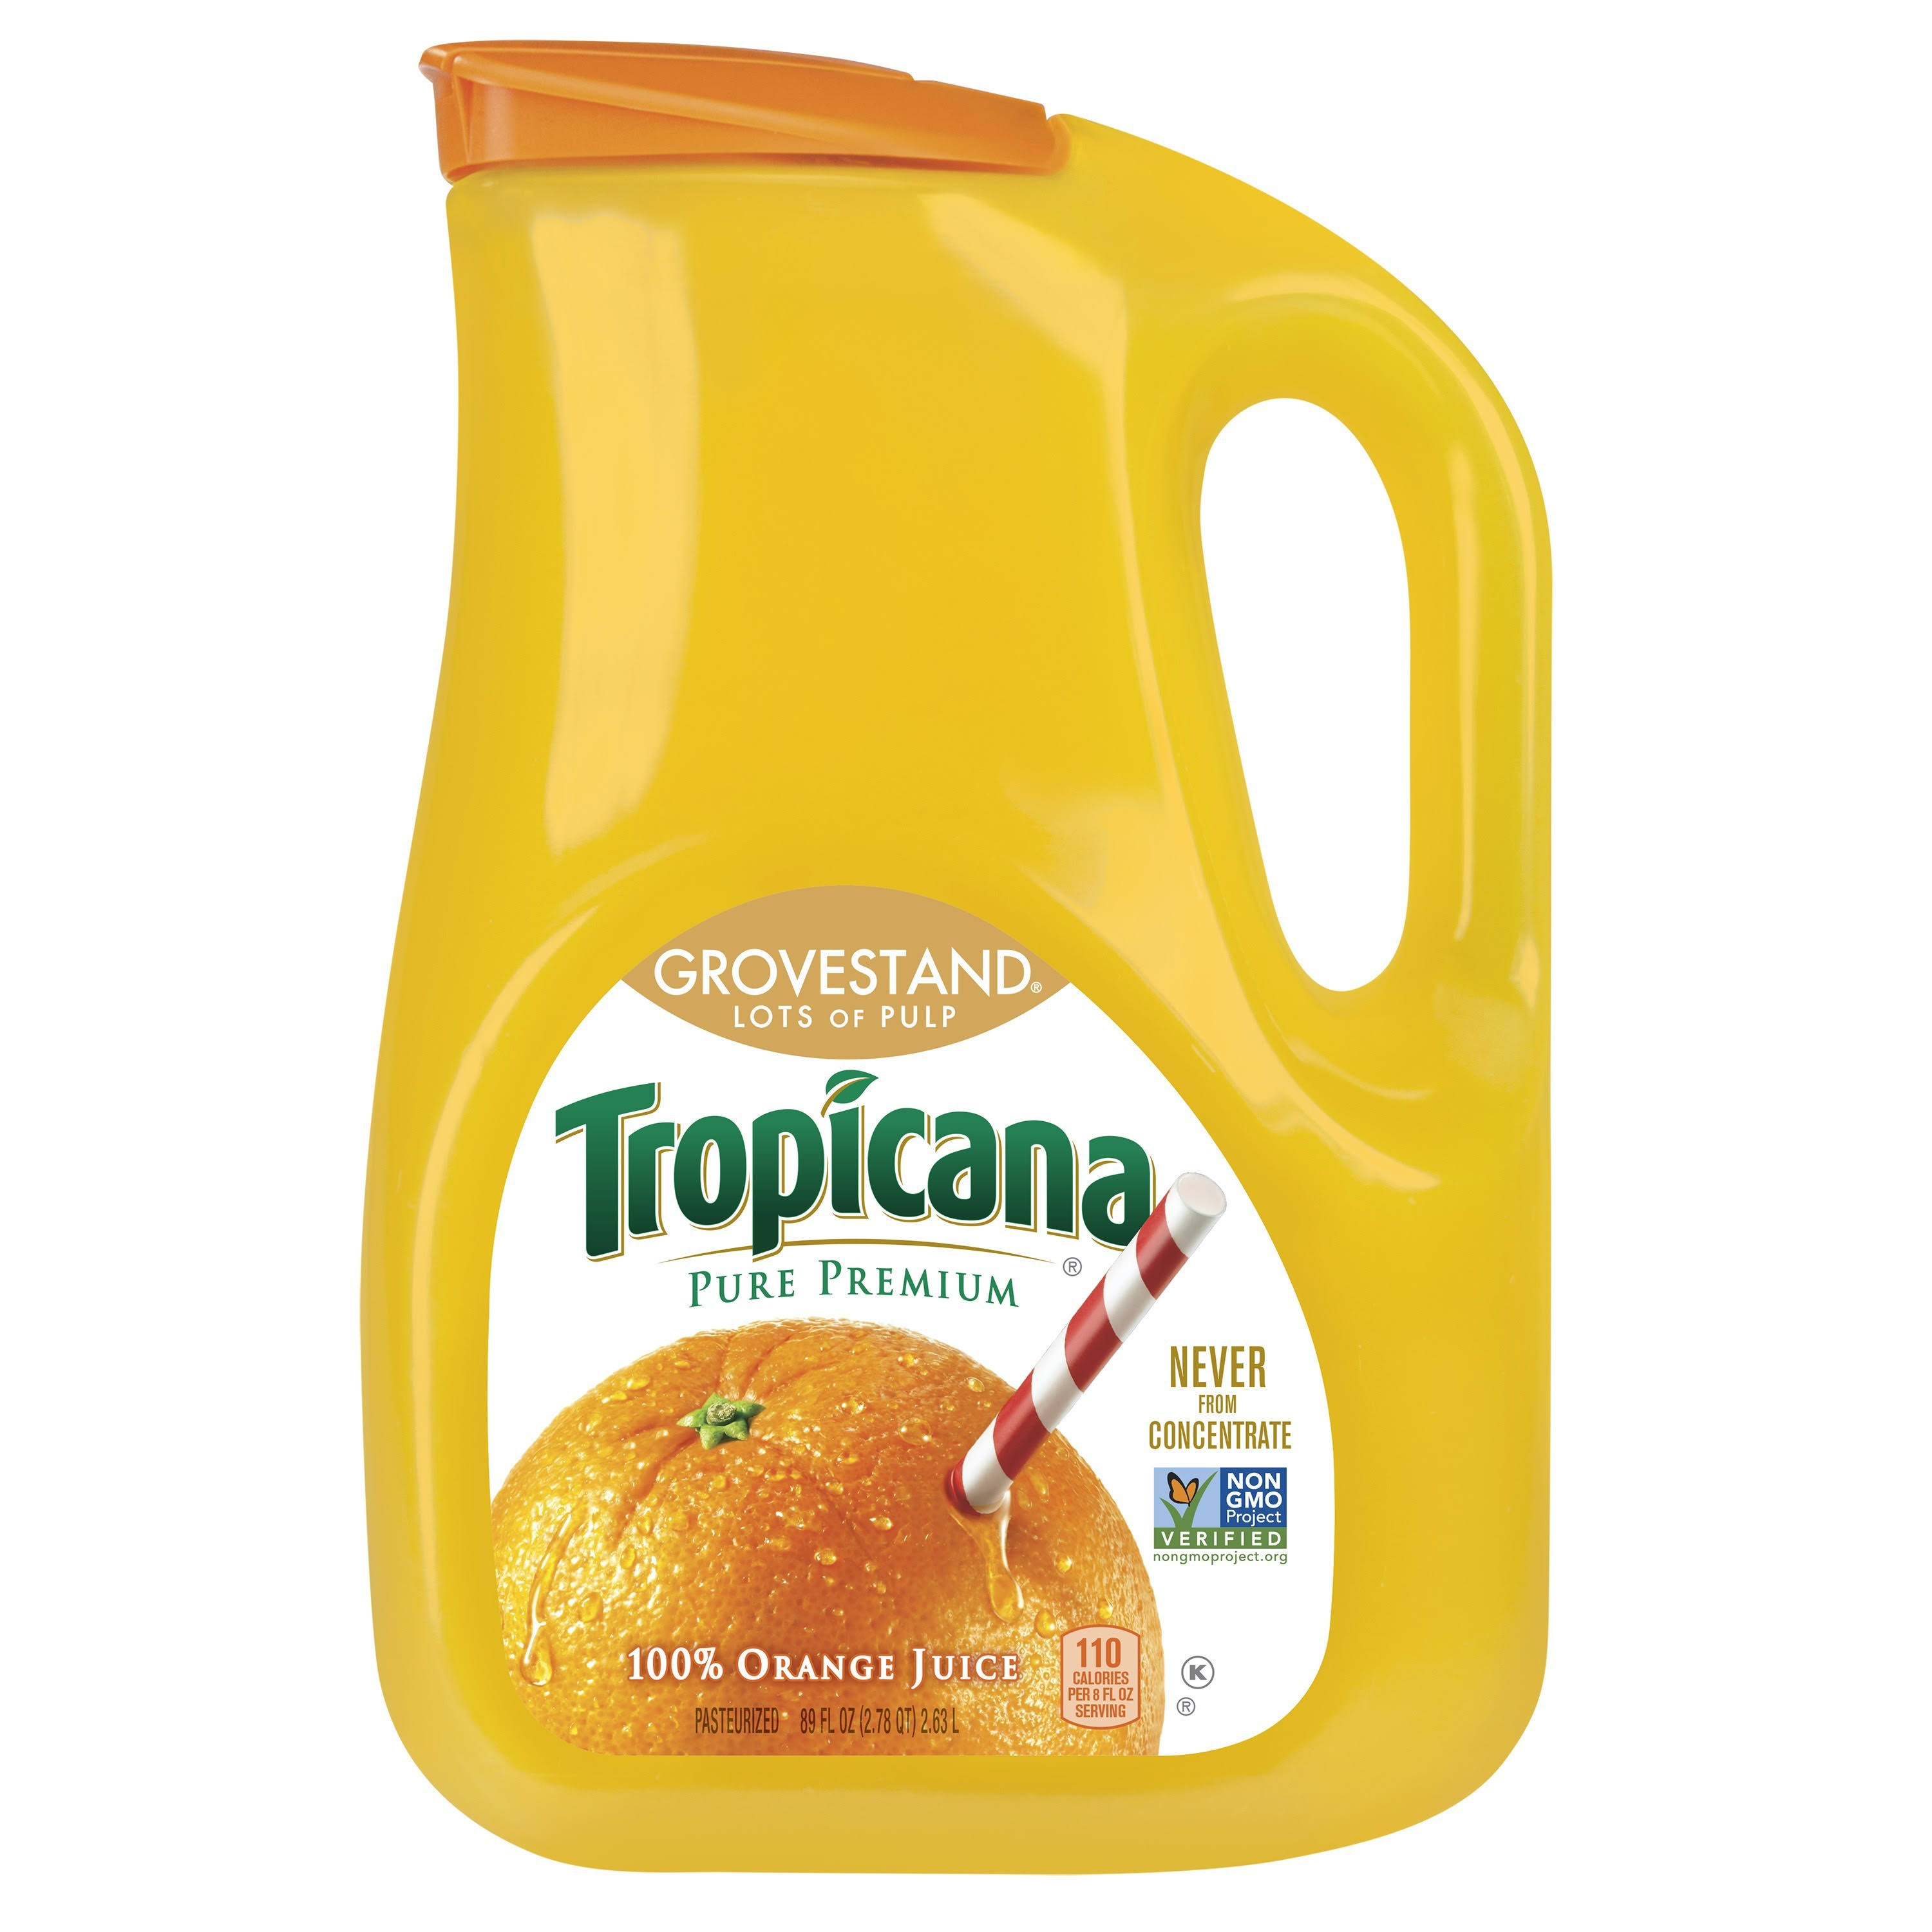 Tropicana Pure Premium Grovestand Lots of Pulp Orange Juice - 89 Oz